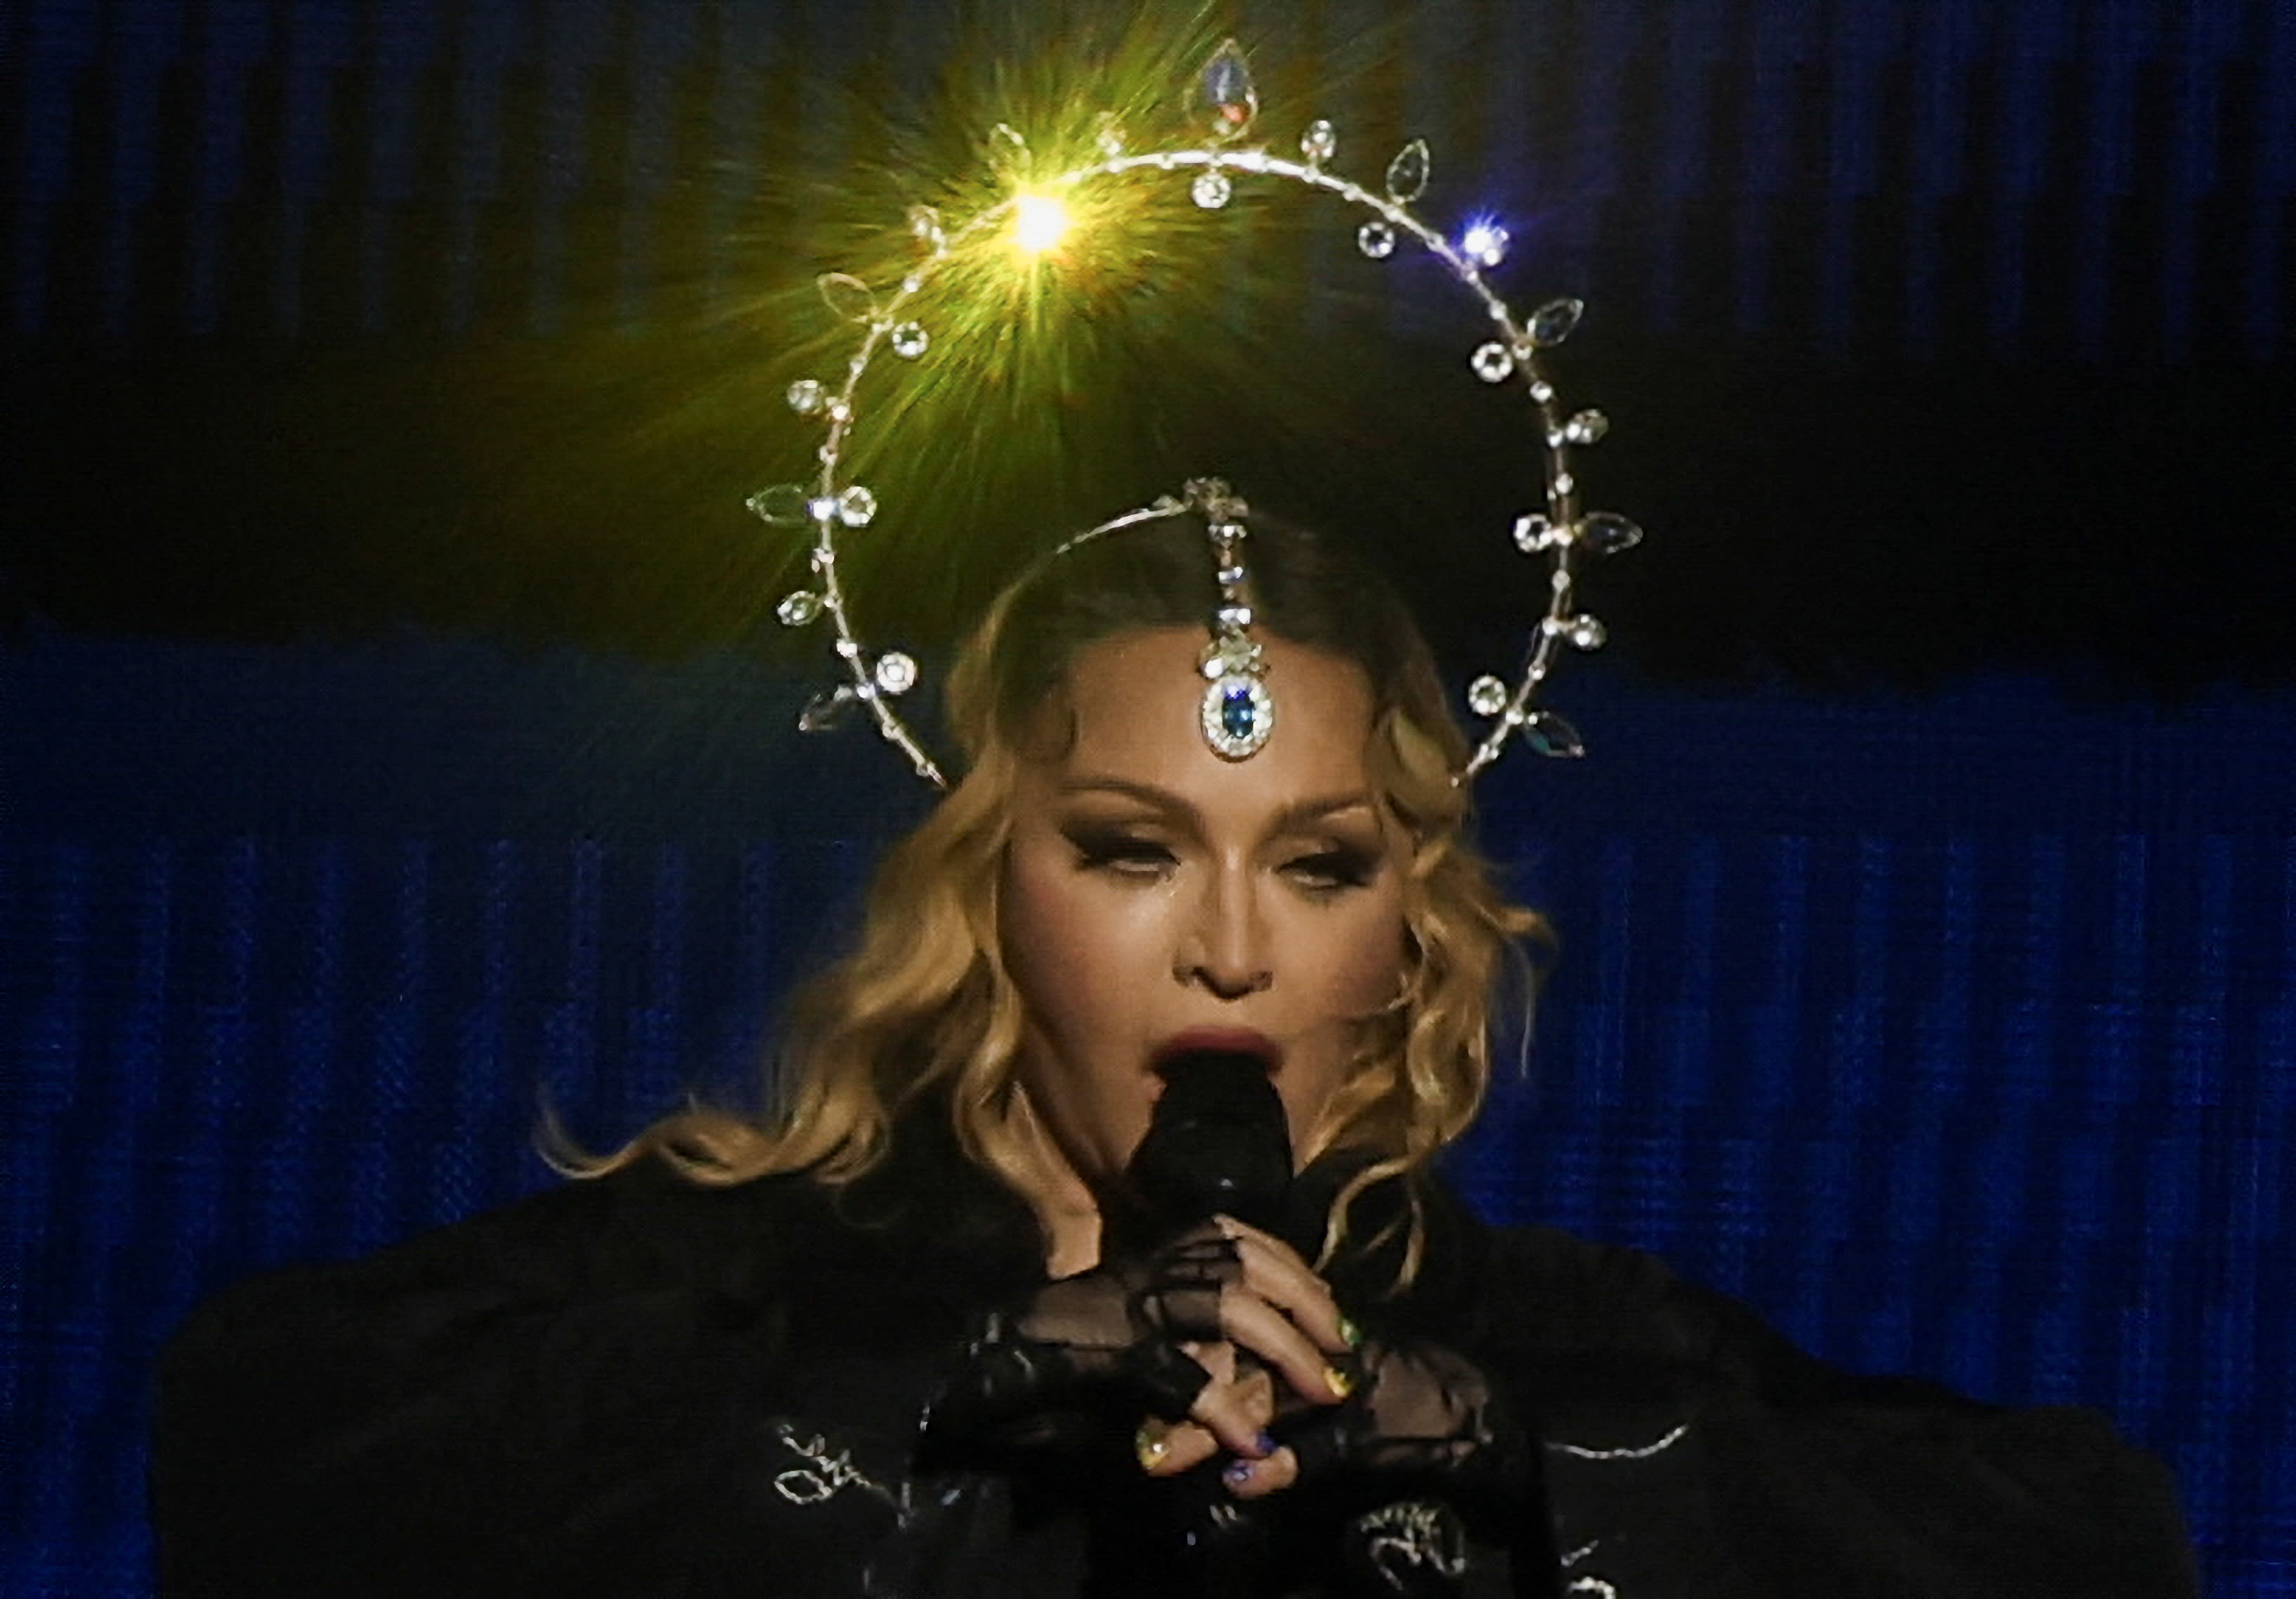 Free Madonna concert draws 1.6 million fans to Brazil's Copacabana beach